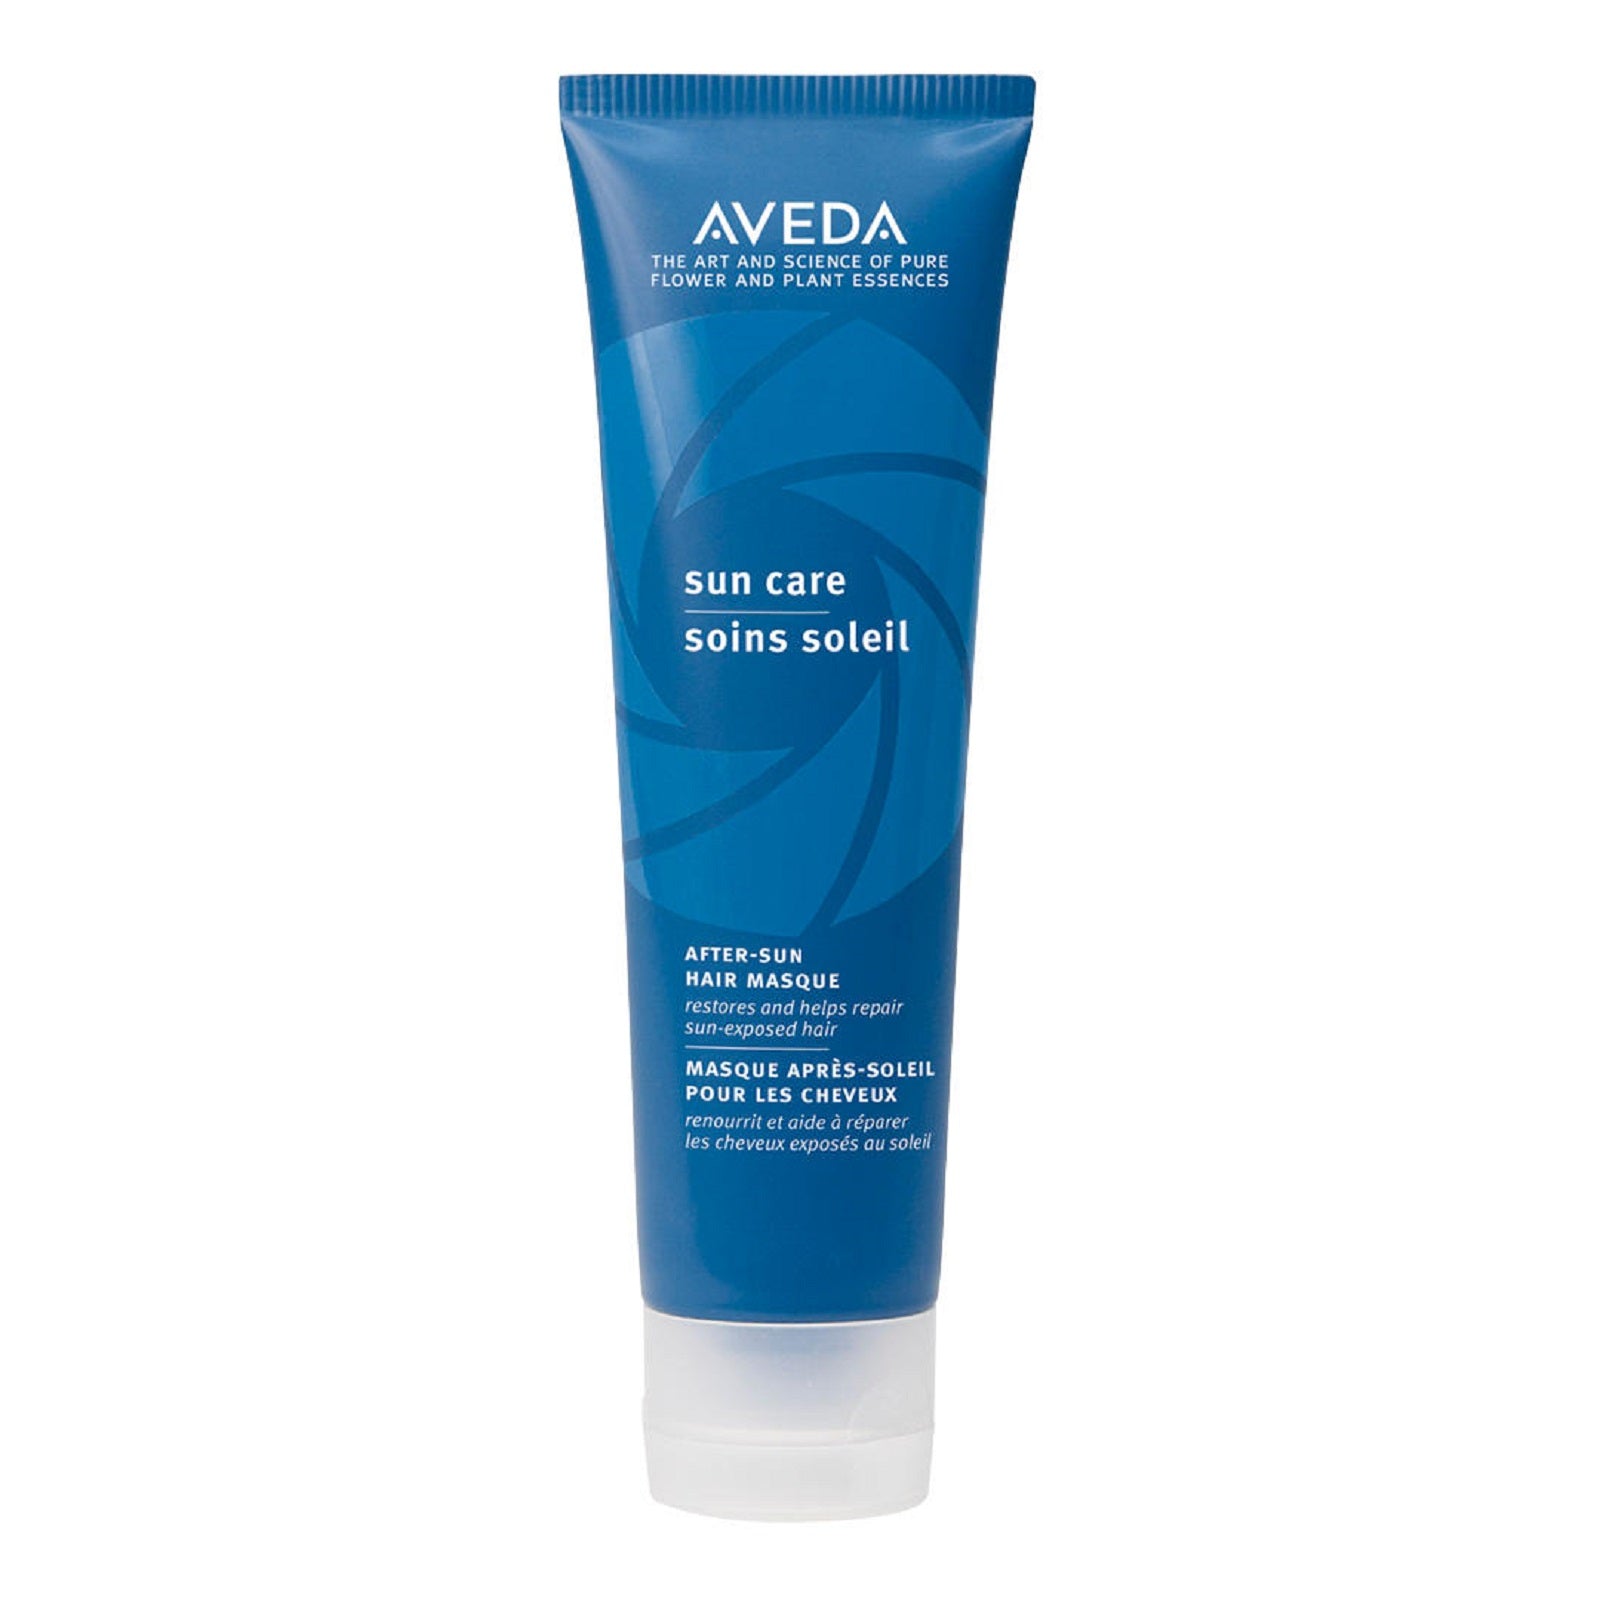 AVEDA Sun Care After-Sun Hair Masque 125ml 4.2oz (rinse treatment)